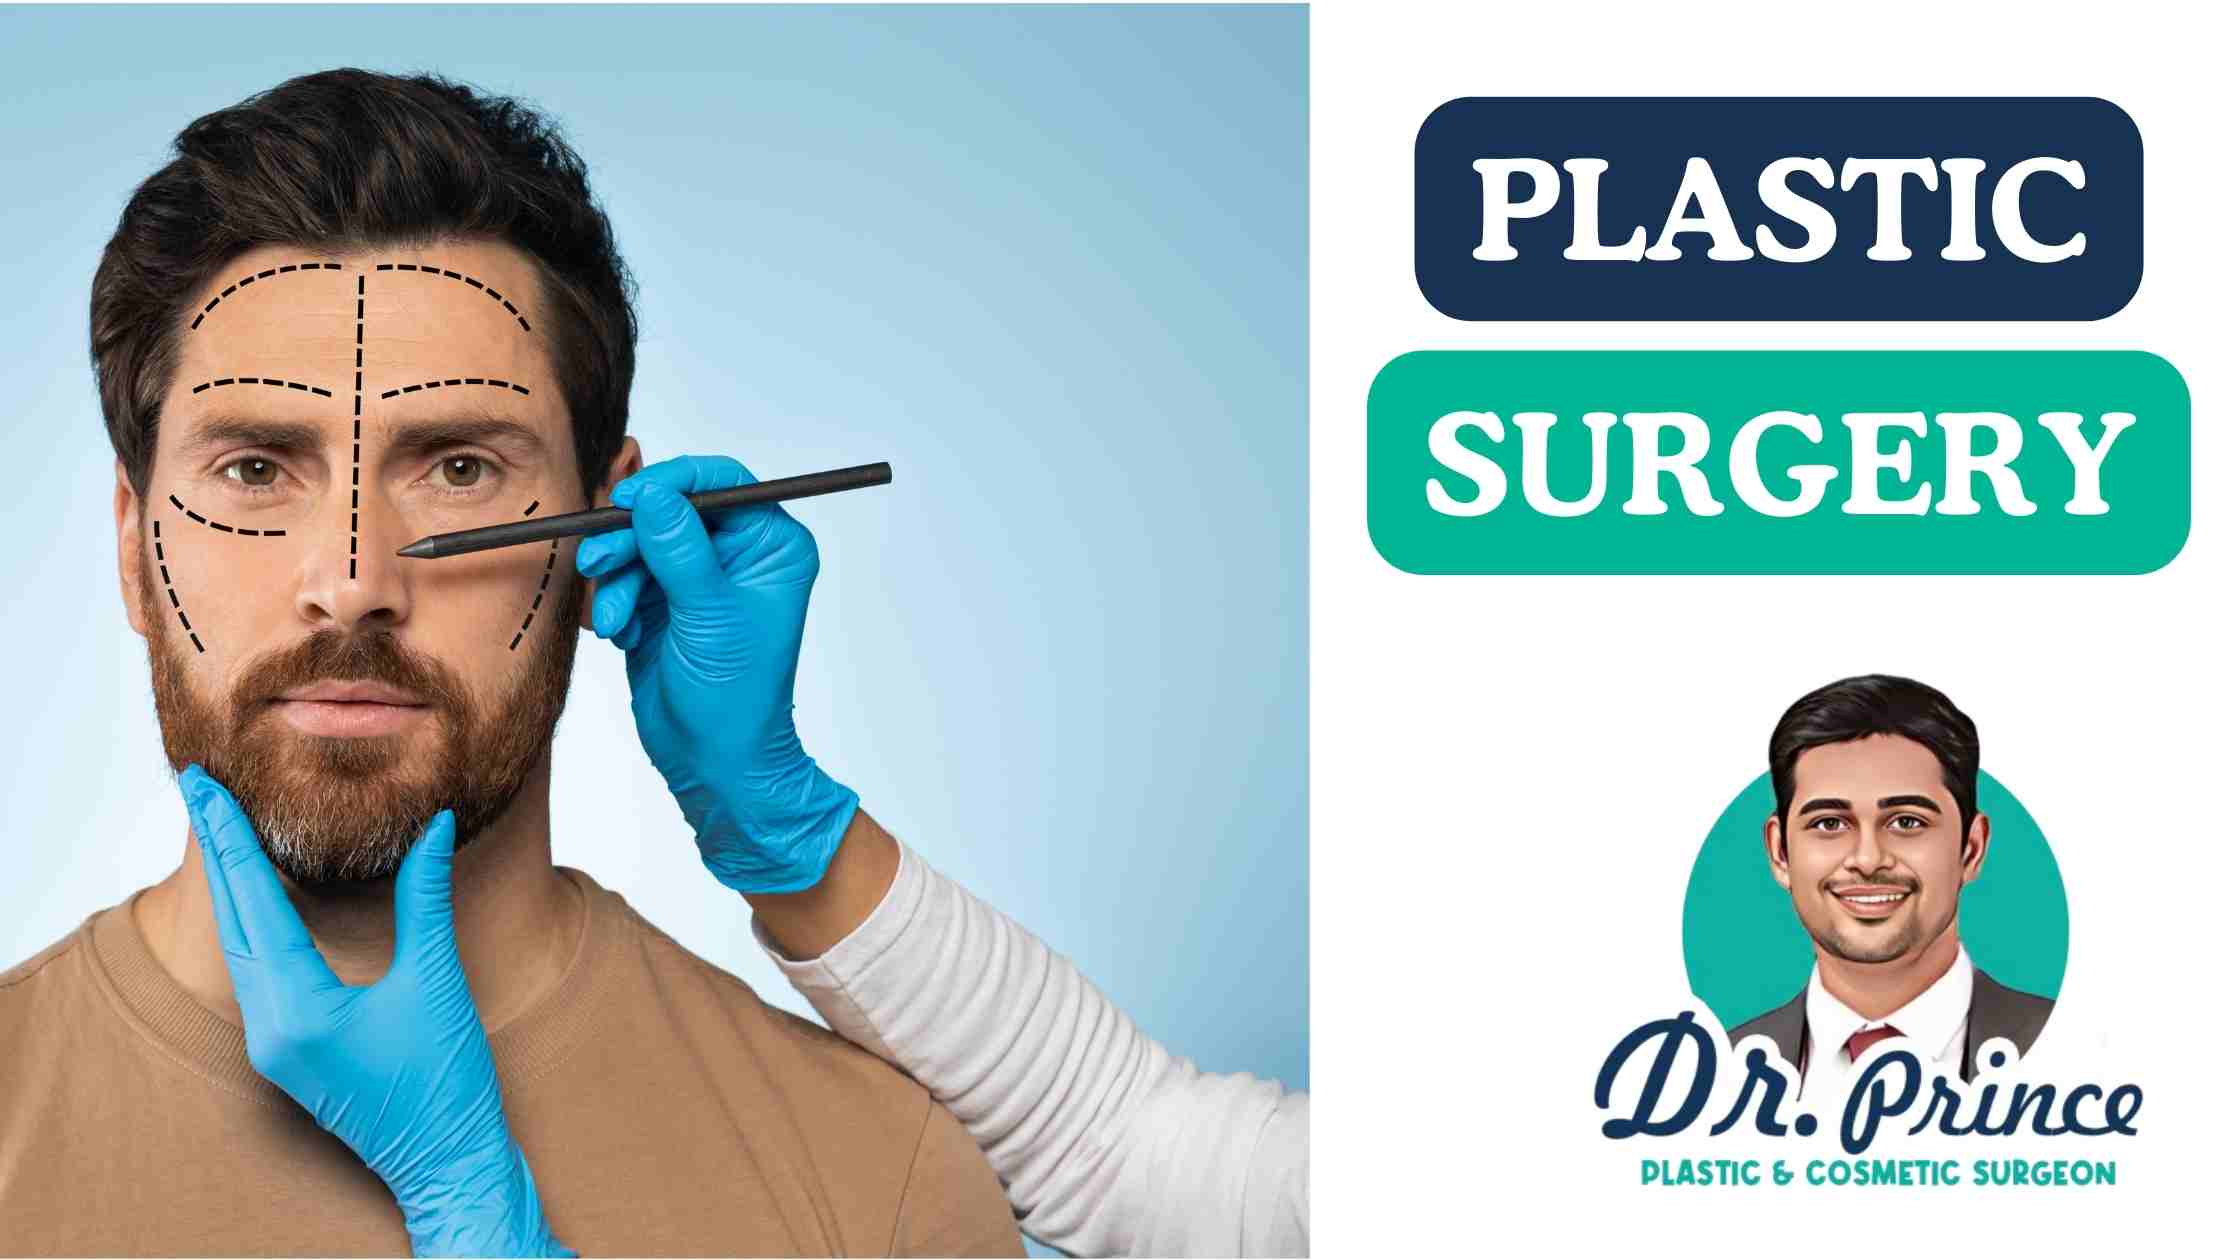 Dr. Prince - Renowned Plastic Surgeon in Kerala, India